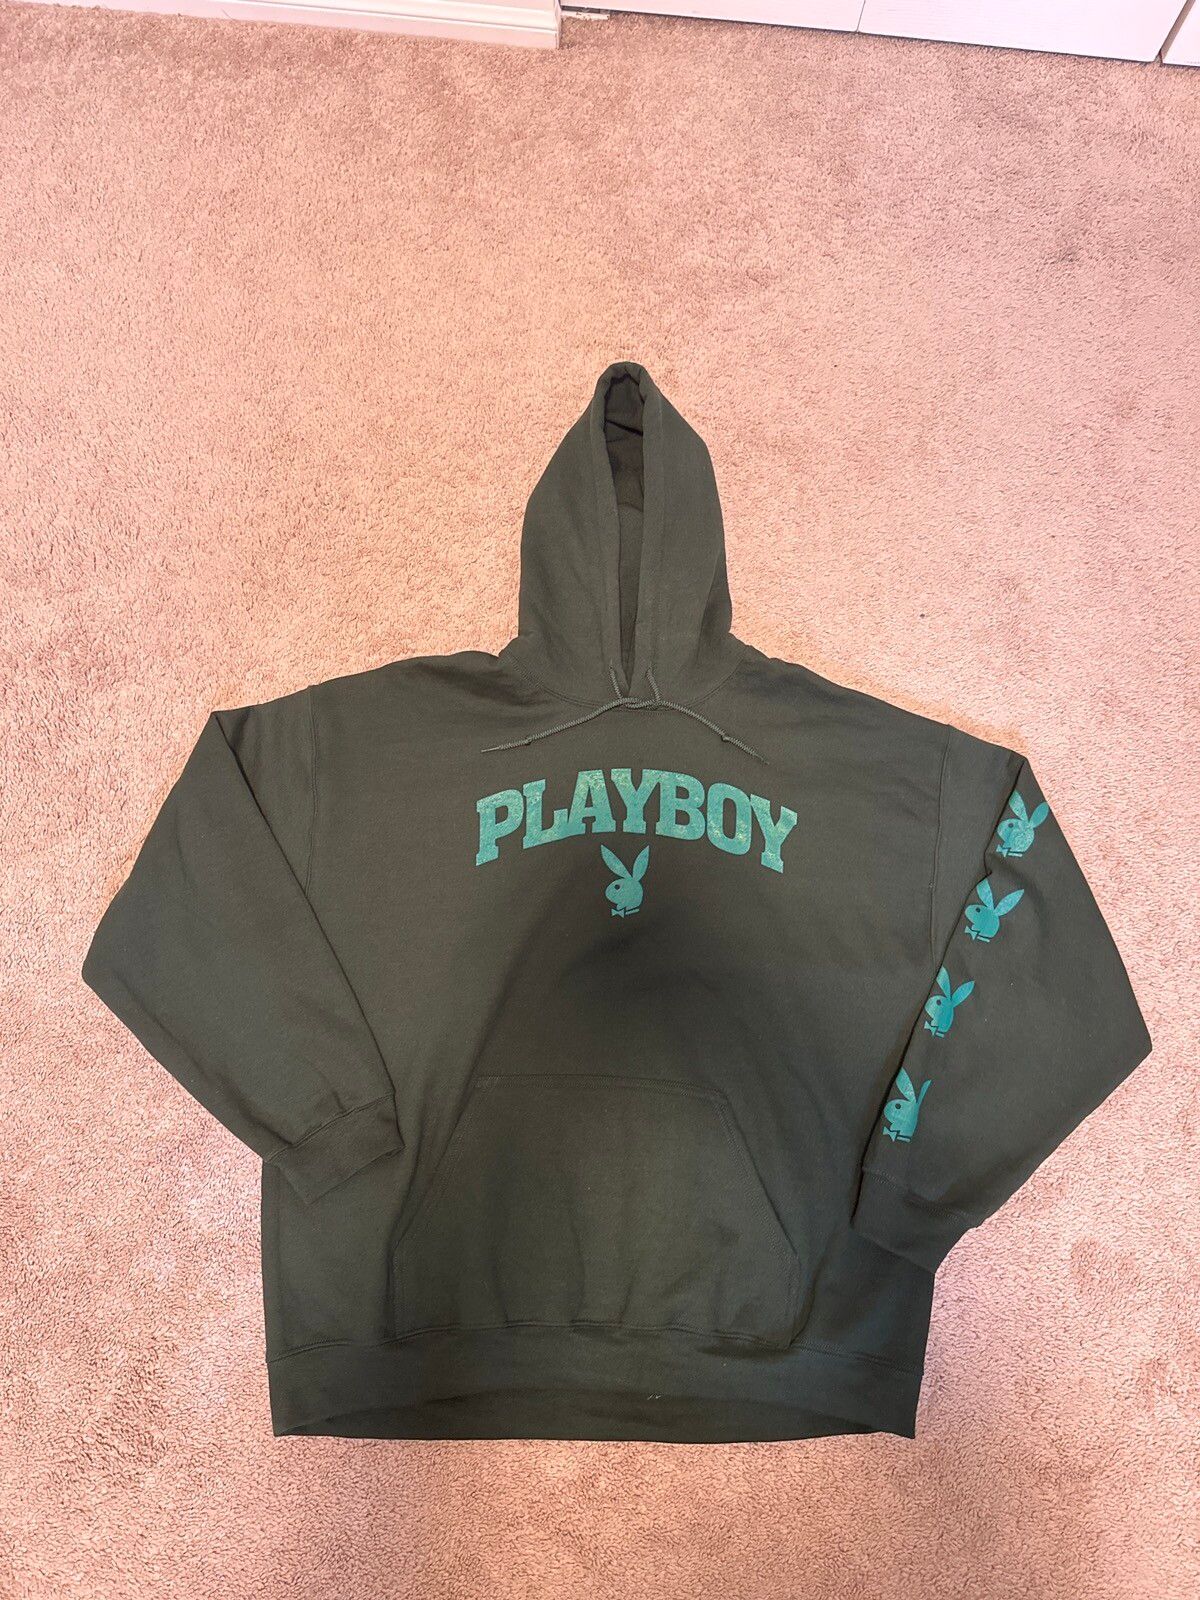 Playboy Mens XL PLAYBOY Hoodie Size US XL / EU 56 / 4 - 1 Preview